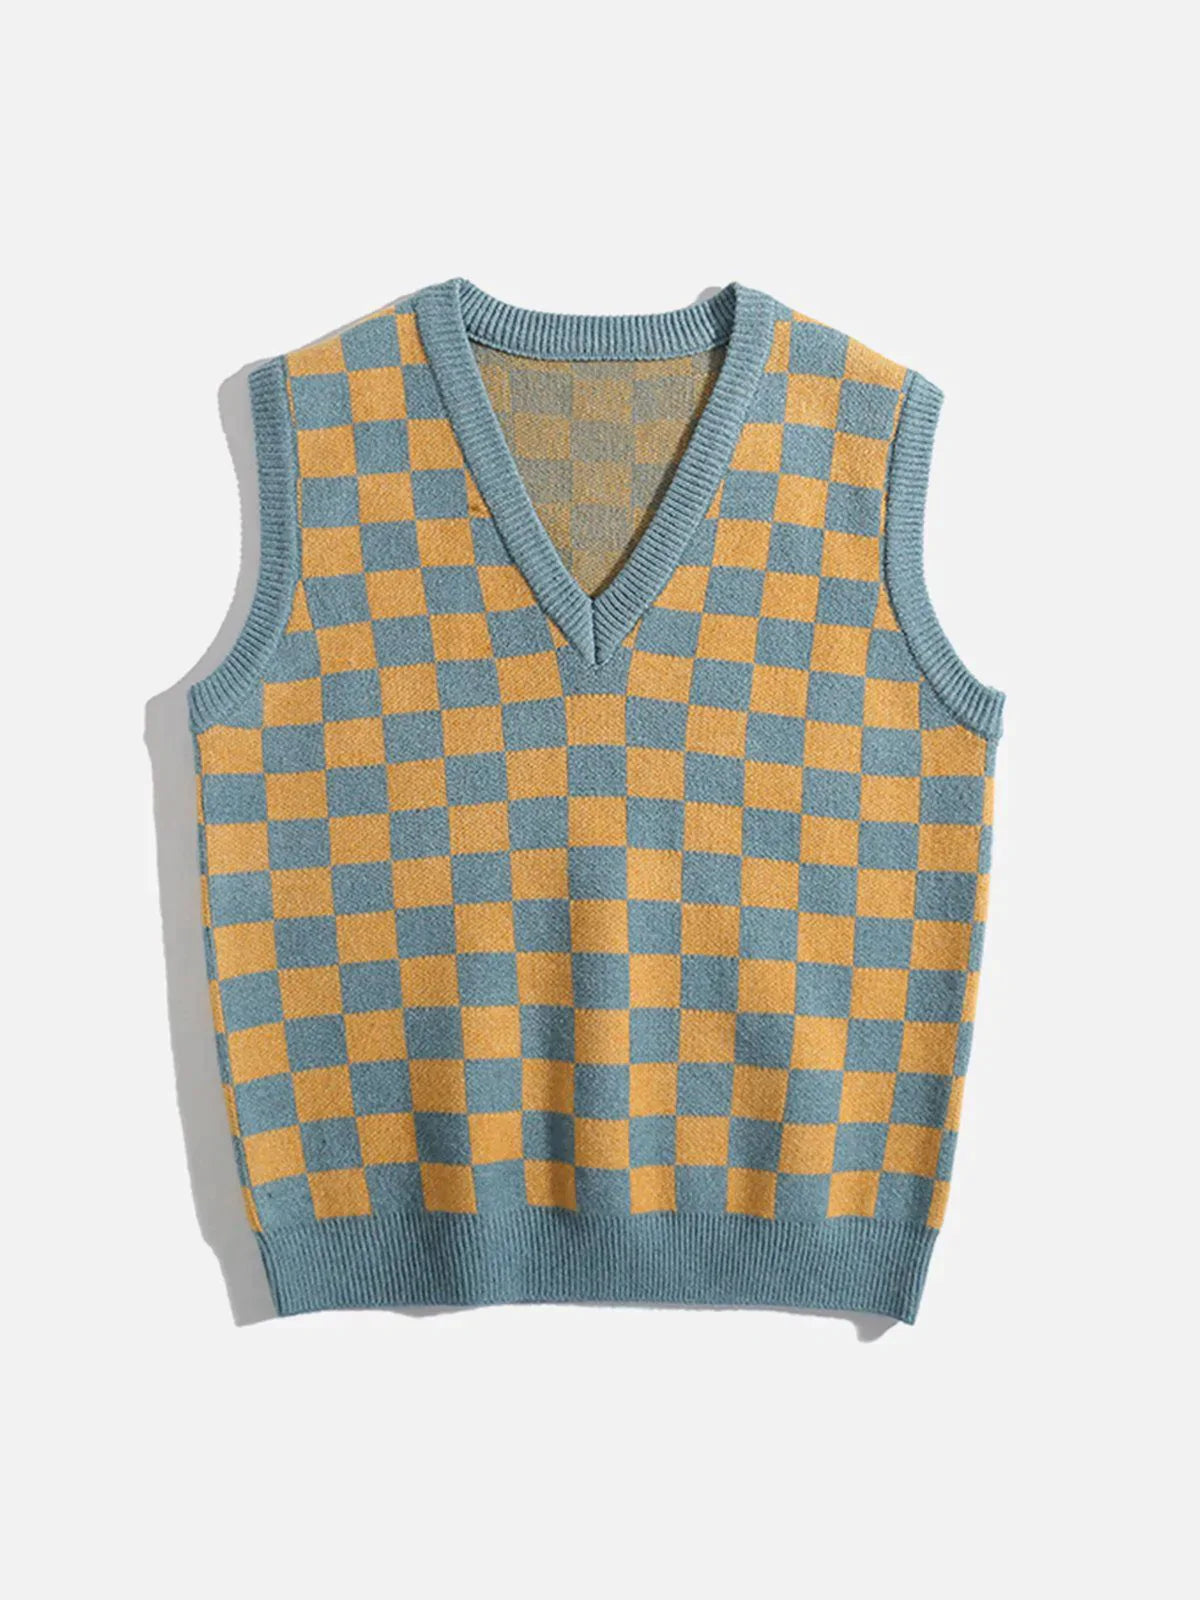 vuitton sweater vest